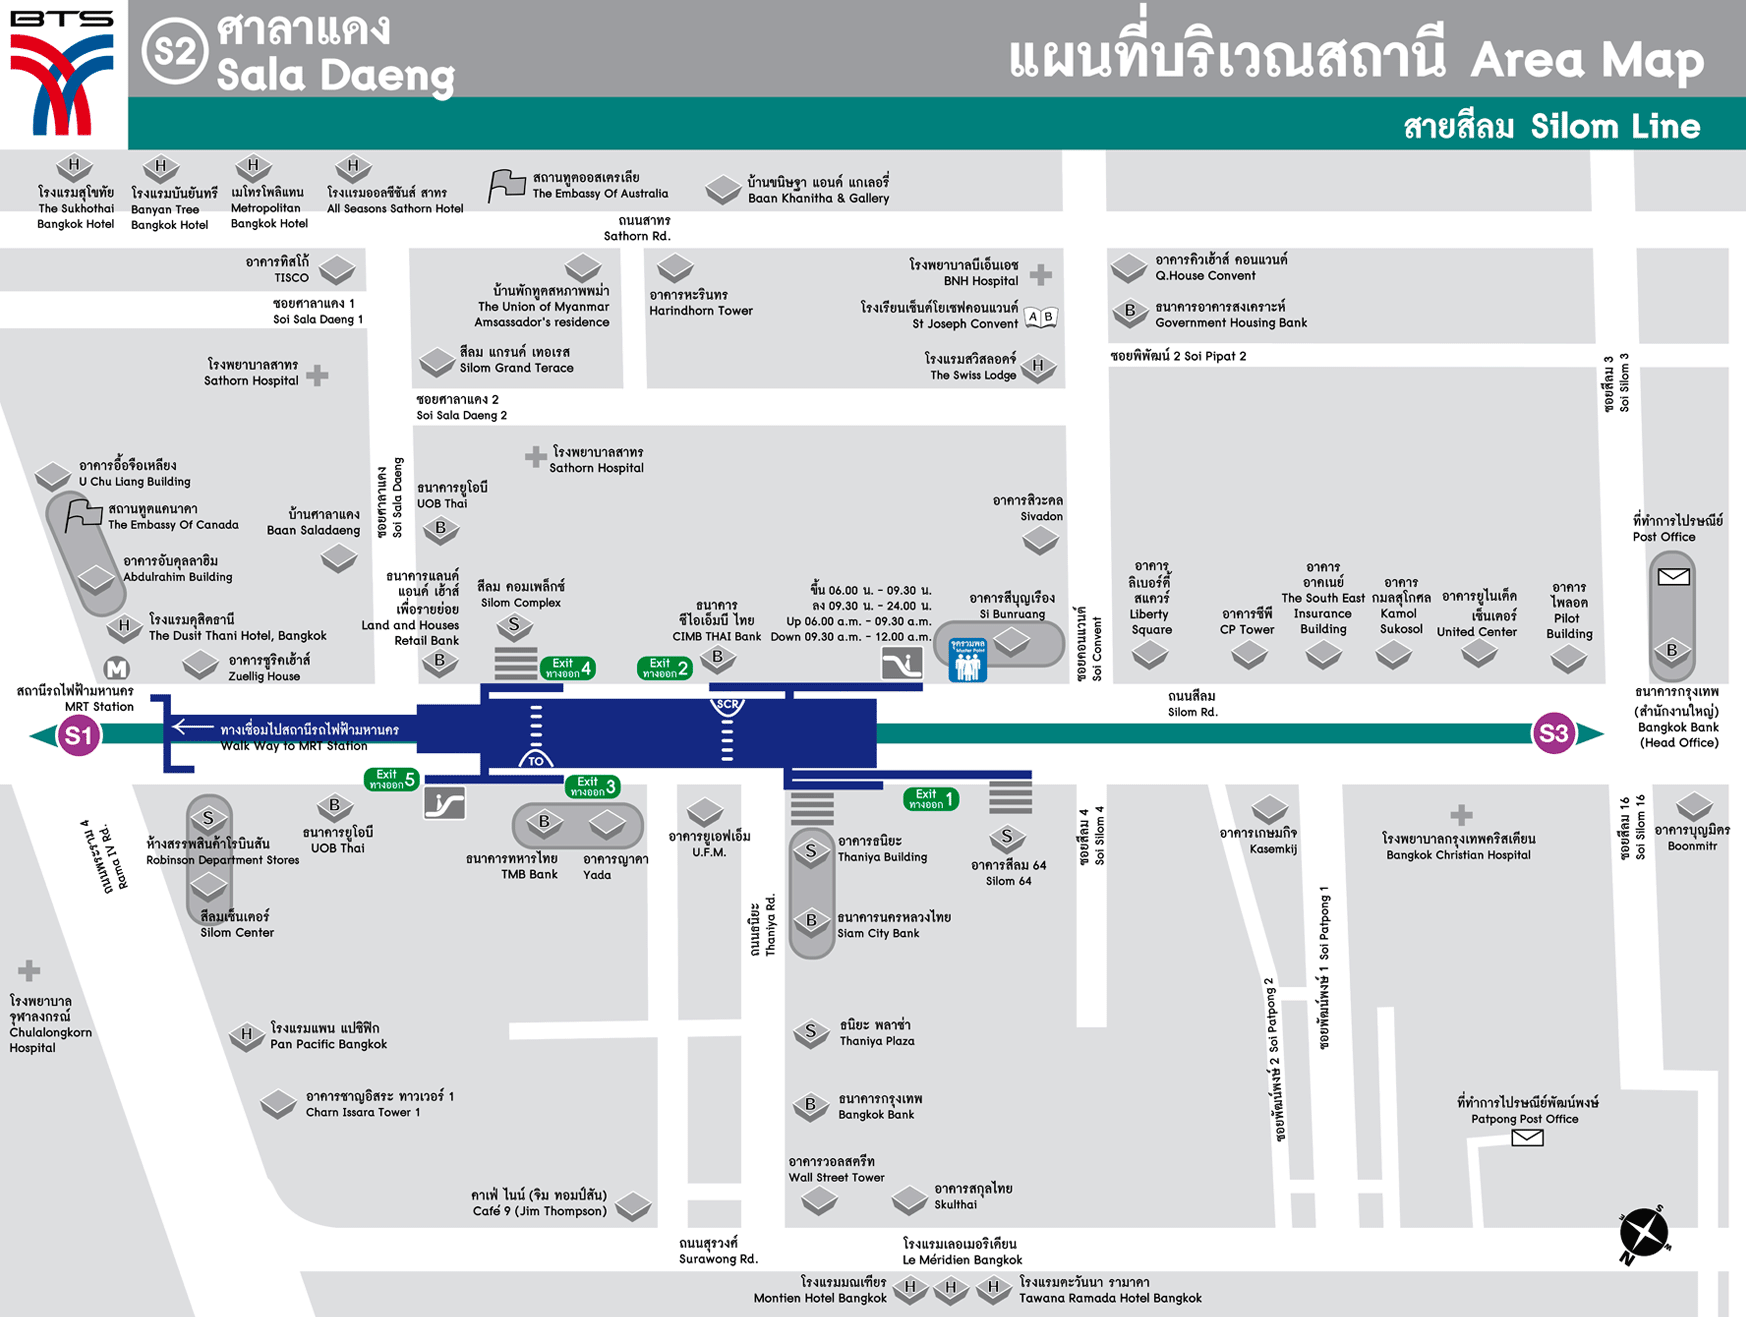 Trạm Bts Sala Daeng (S2) - Skytrain Thái Lan